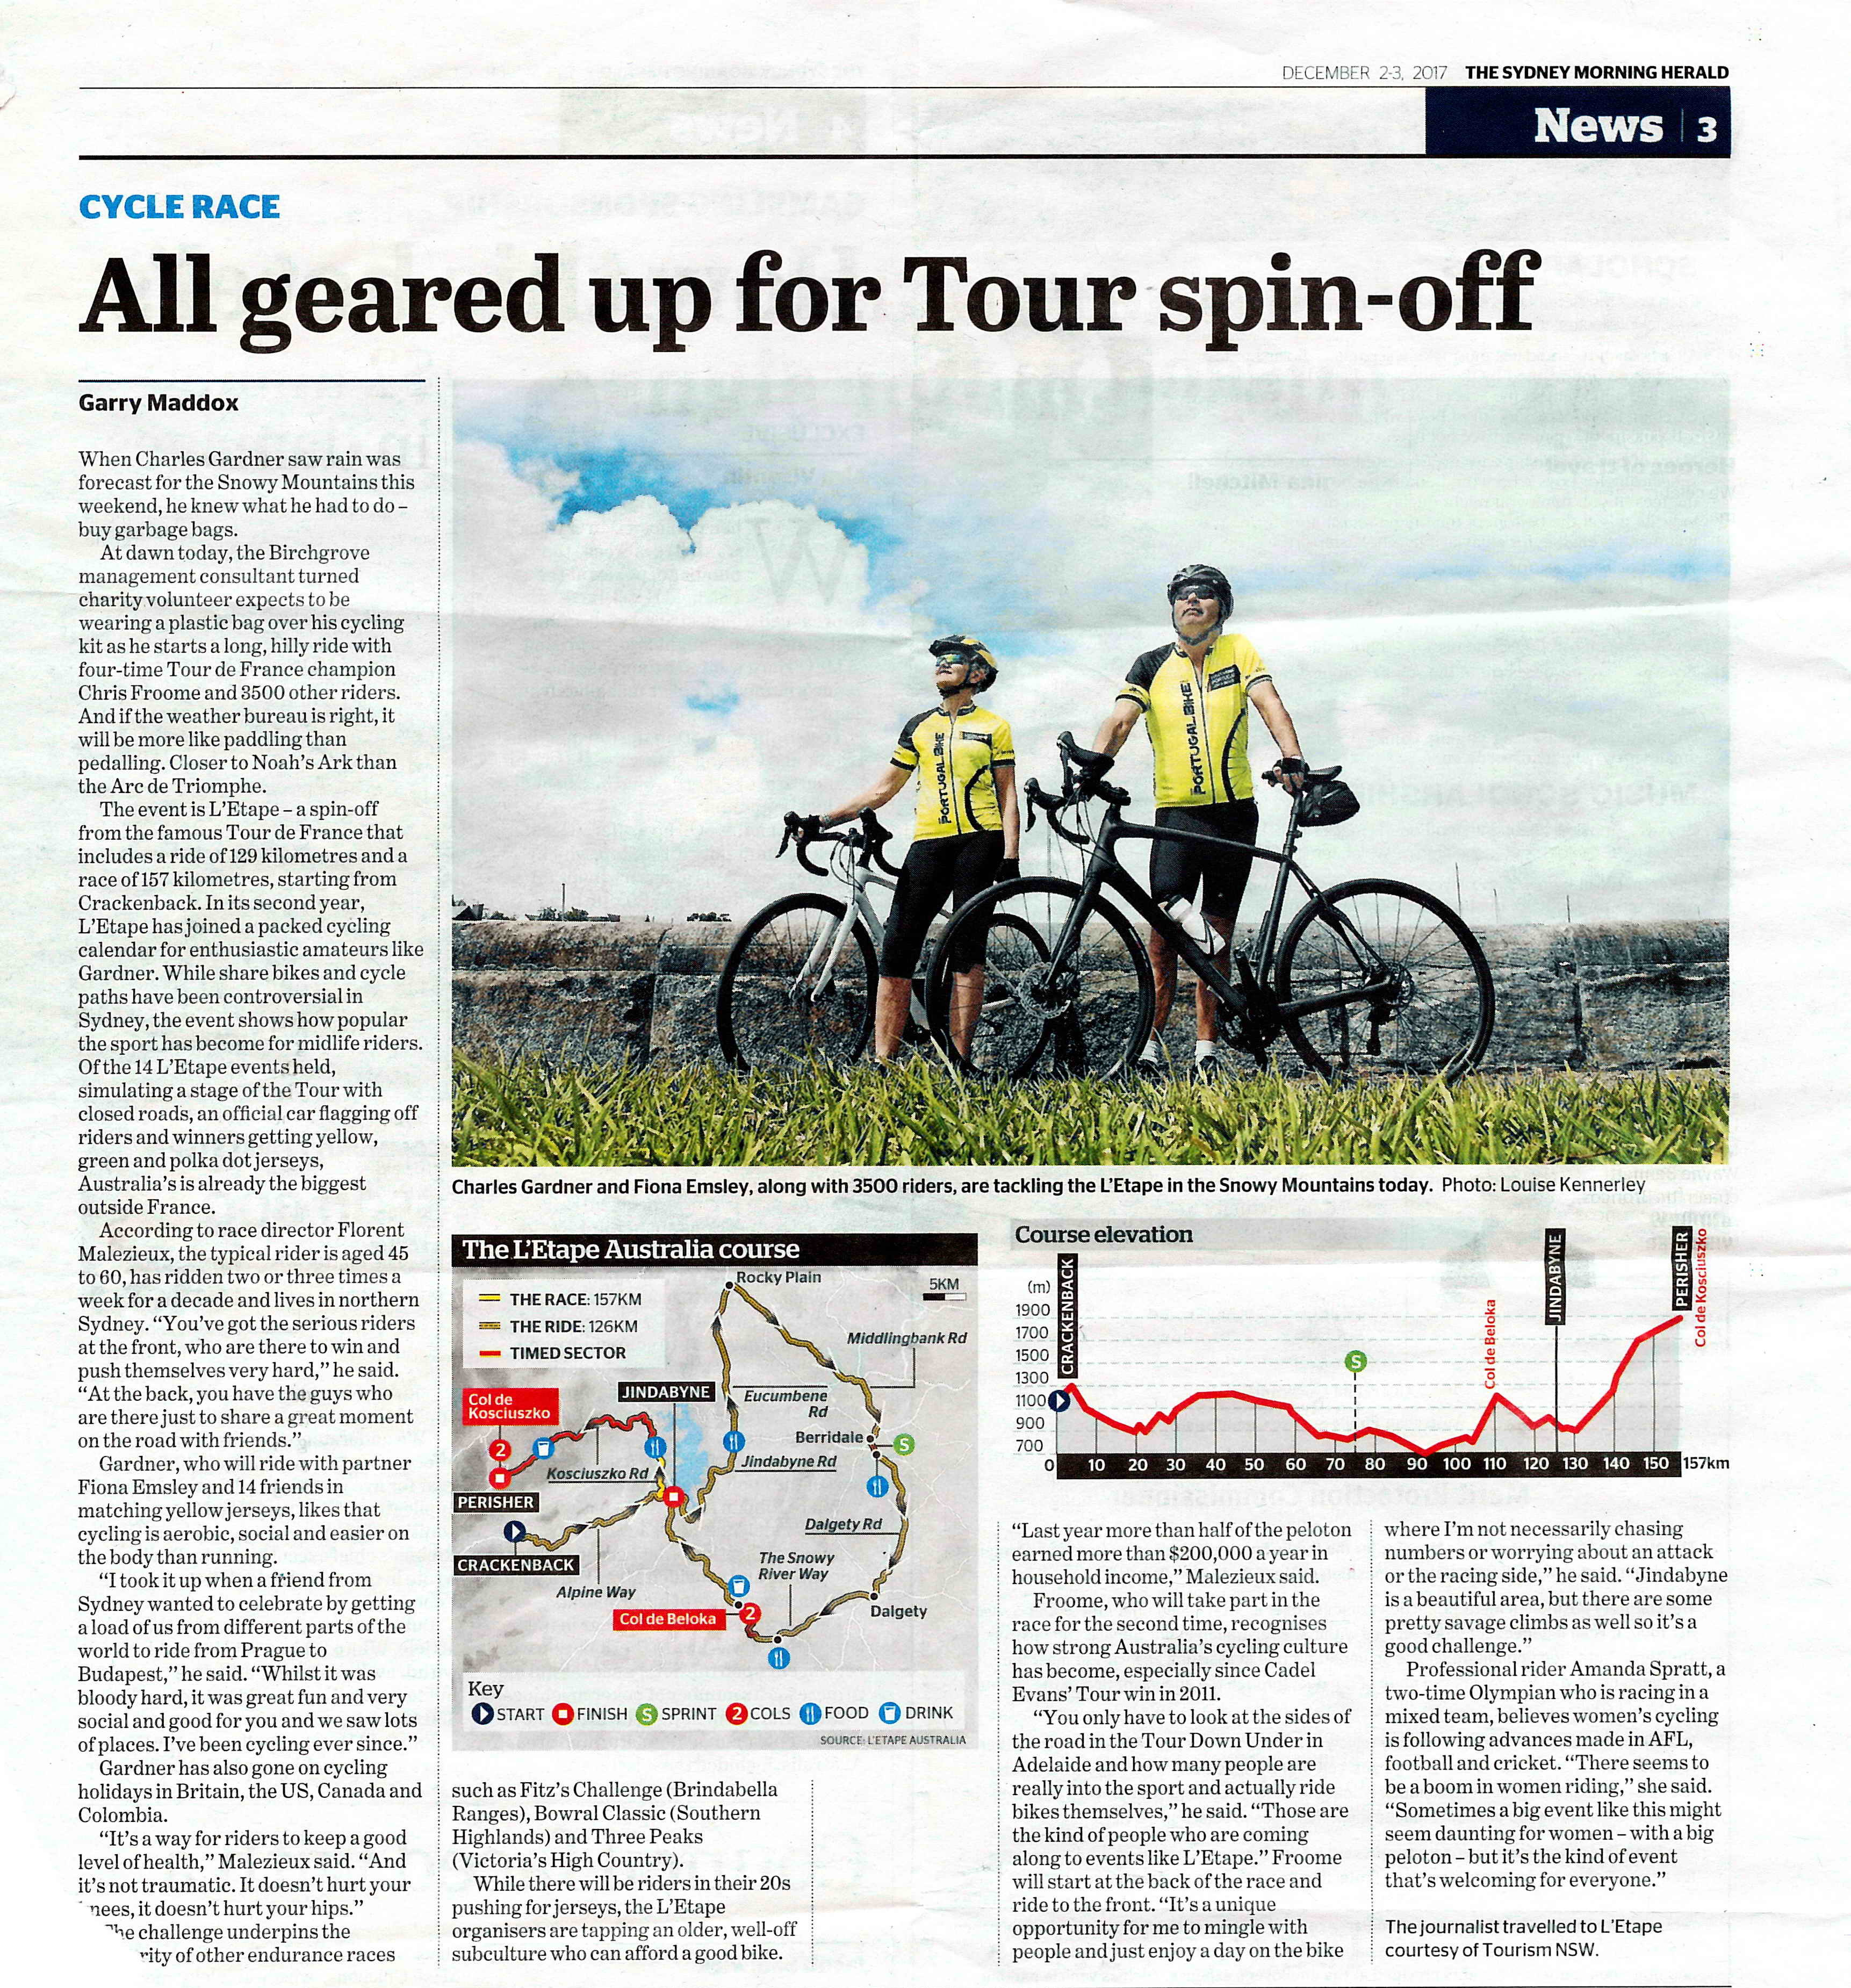 Portugal Bike jerseys on the Sydney Herald